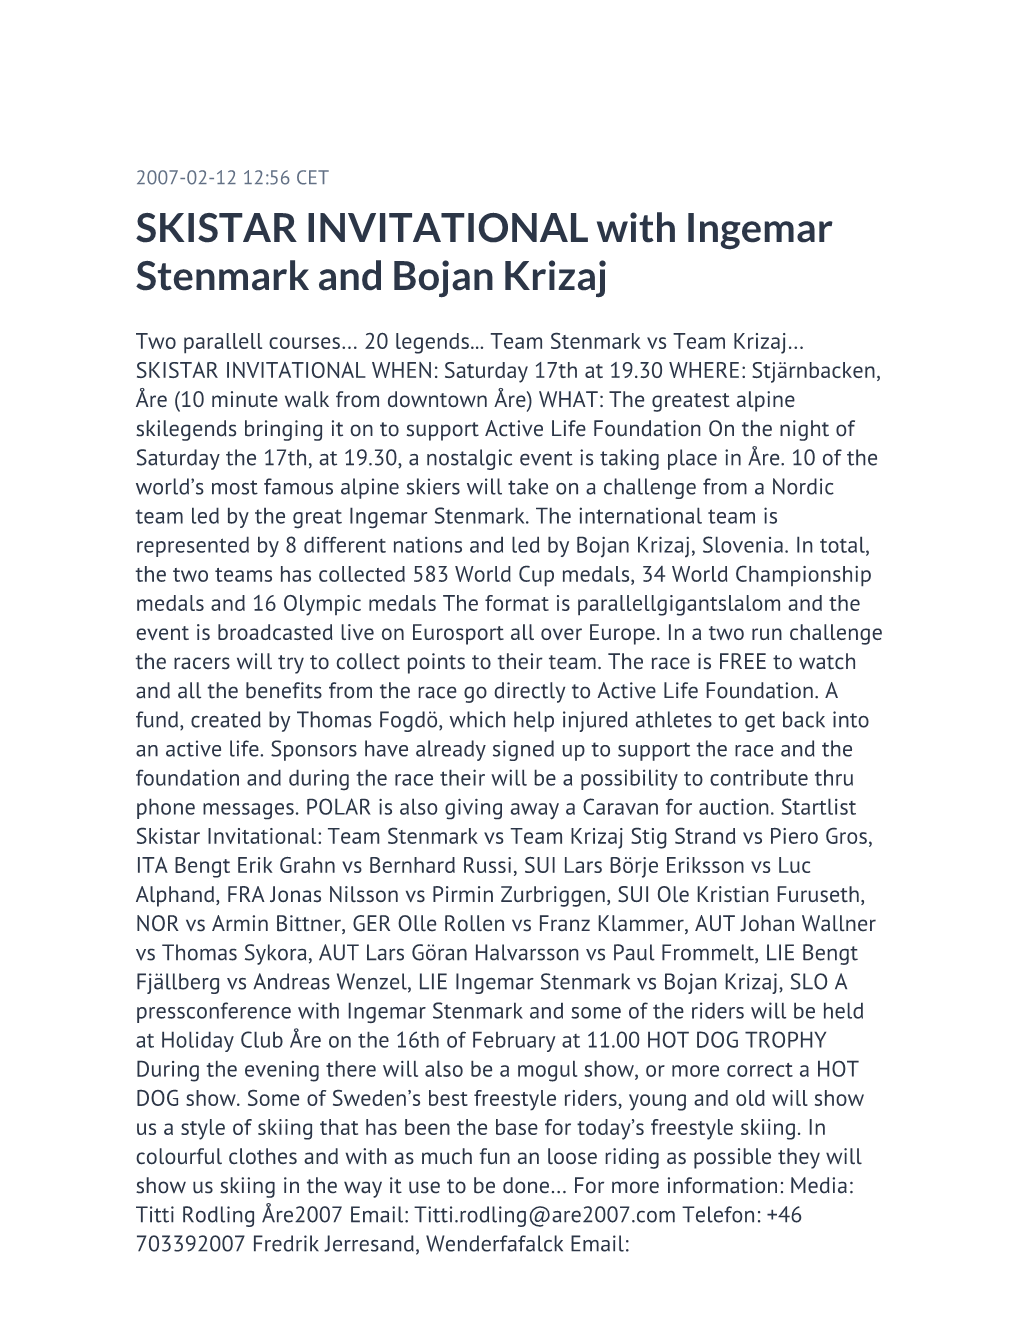 SKISTAR INVITATIONAL with Ingemar Stenmark and Bojan Krizaj